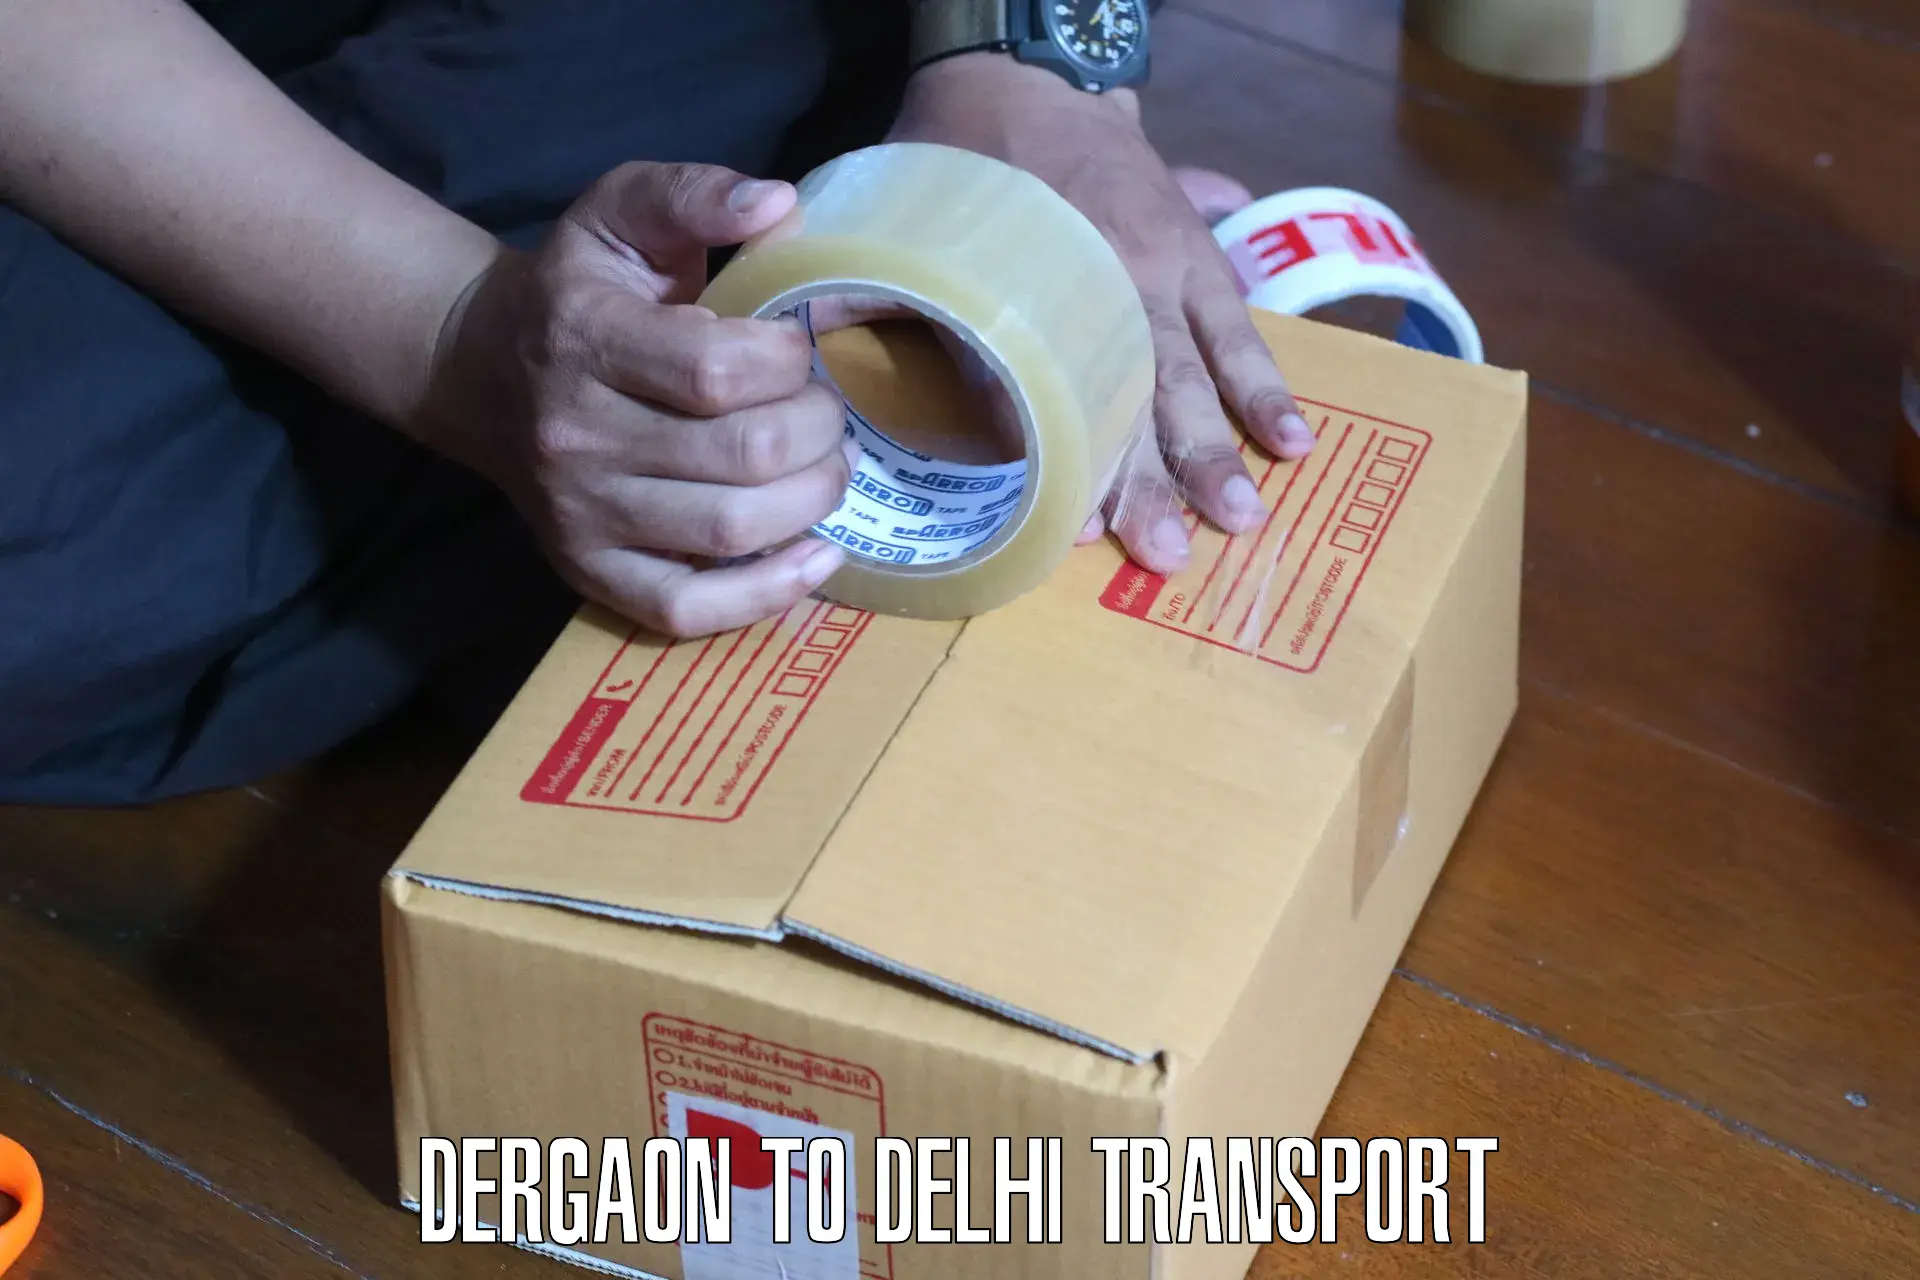 Bike shipping service Dergaon to NCR